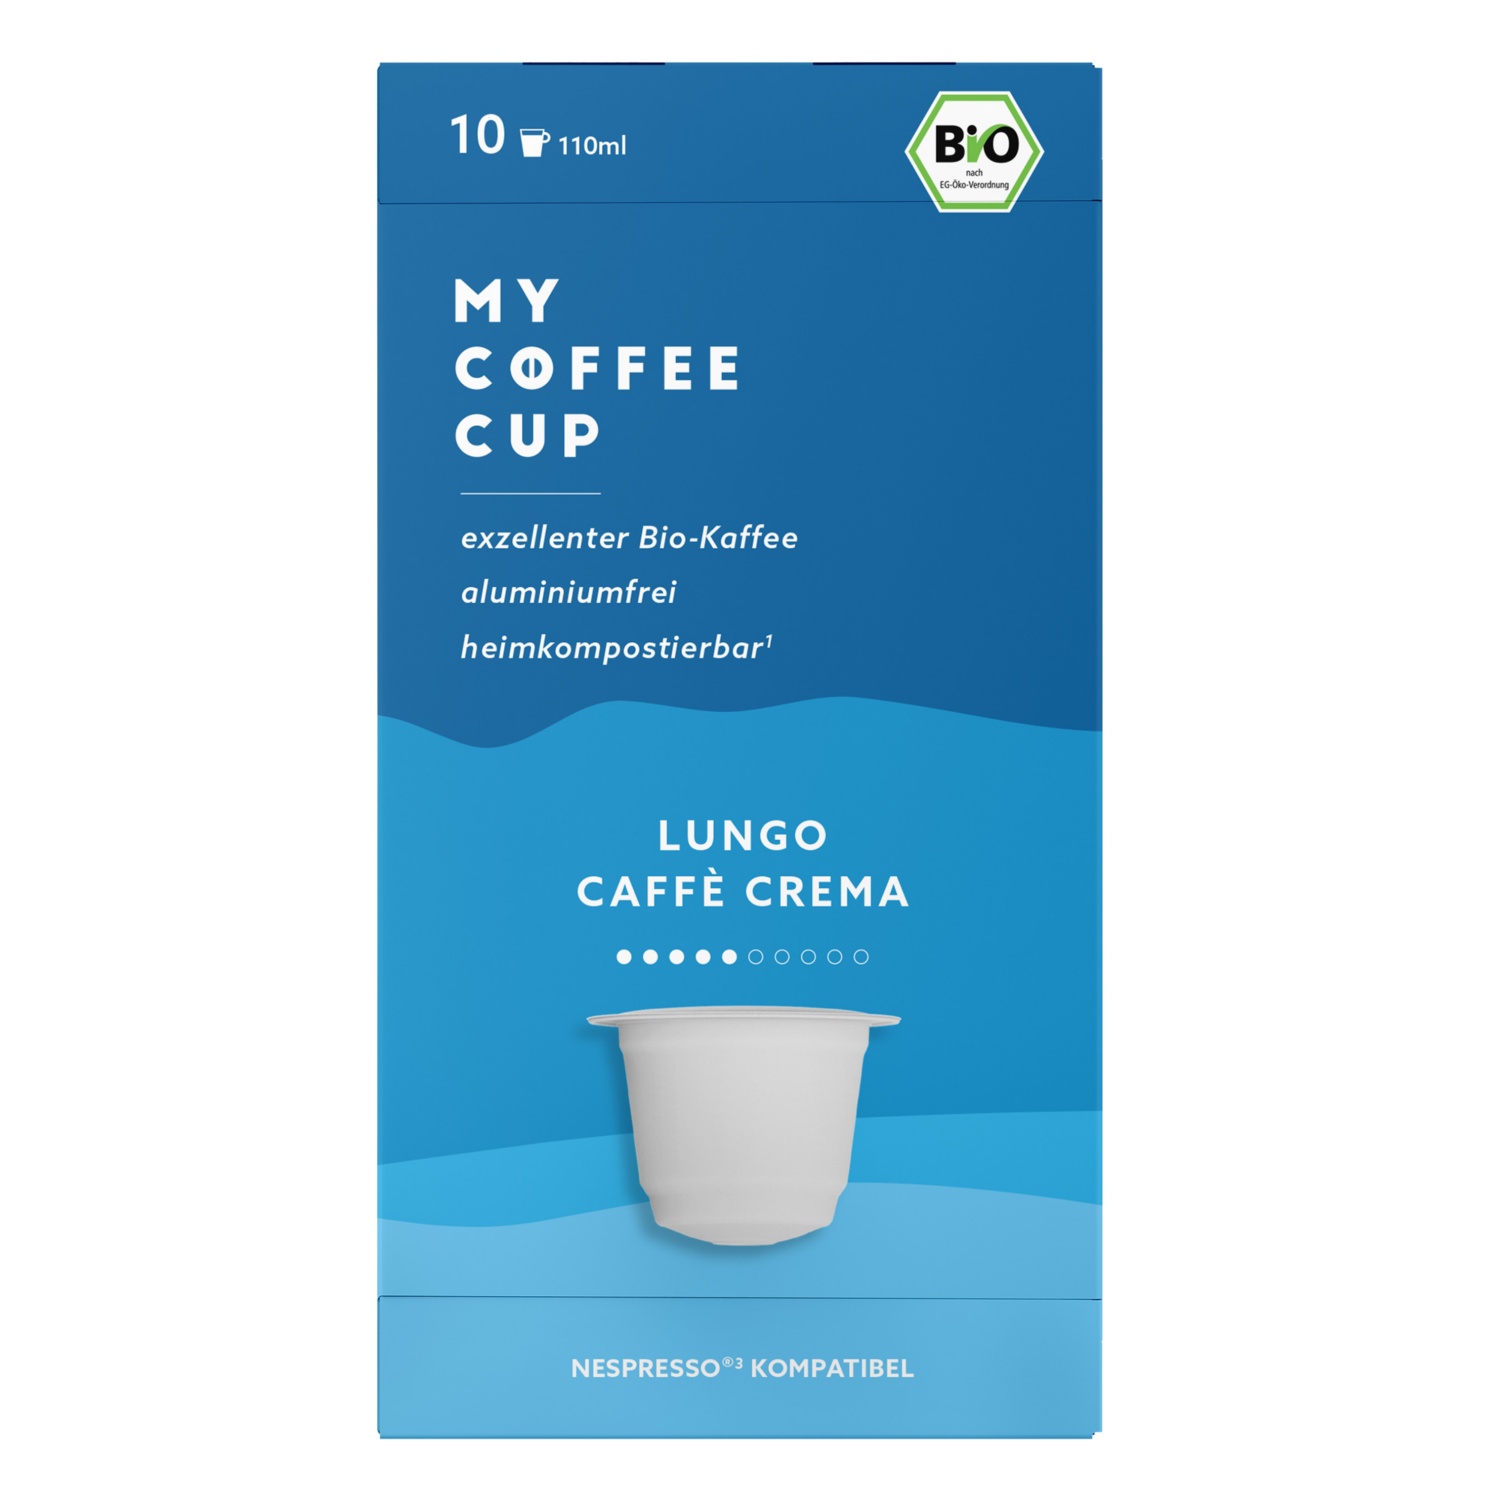 My Coffee Cup Bio-Kaffeekapseln, Lungo Caffè Crema